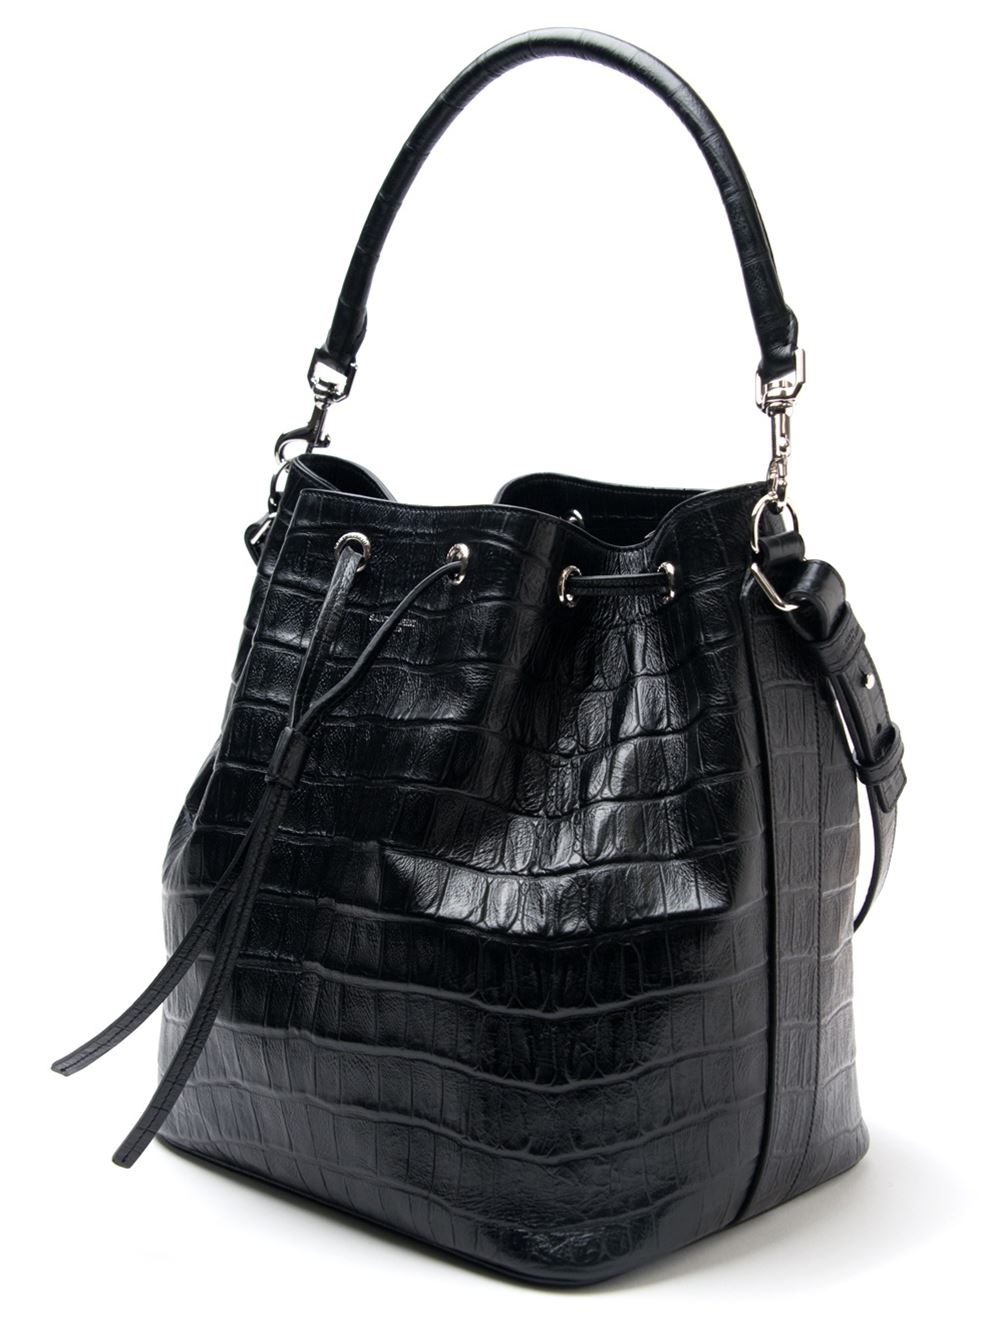 Lyst - Saint laurent Emmanuelle Crocodile-Leather Bucket Bag in Black